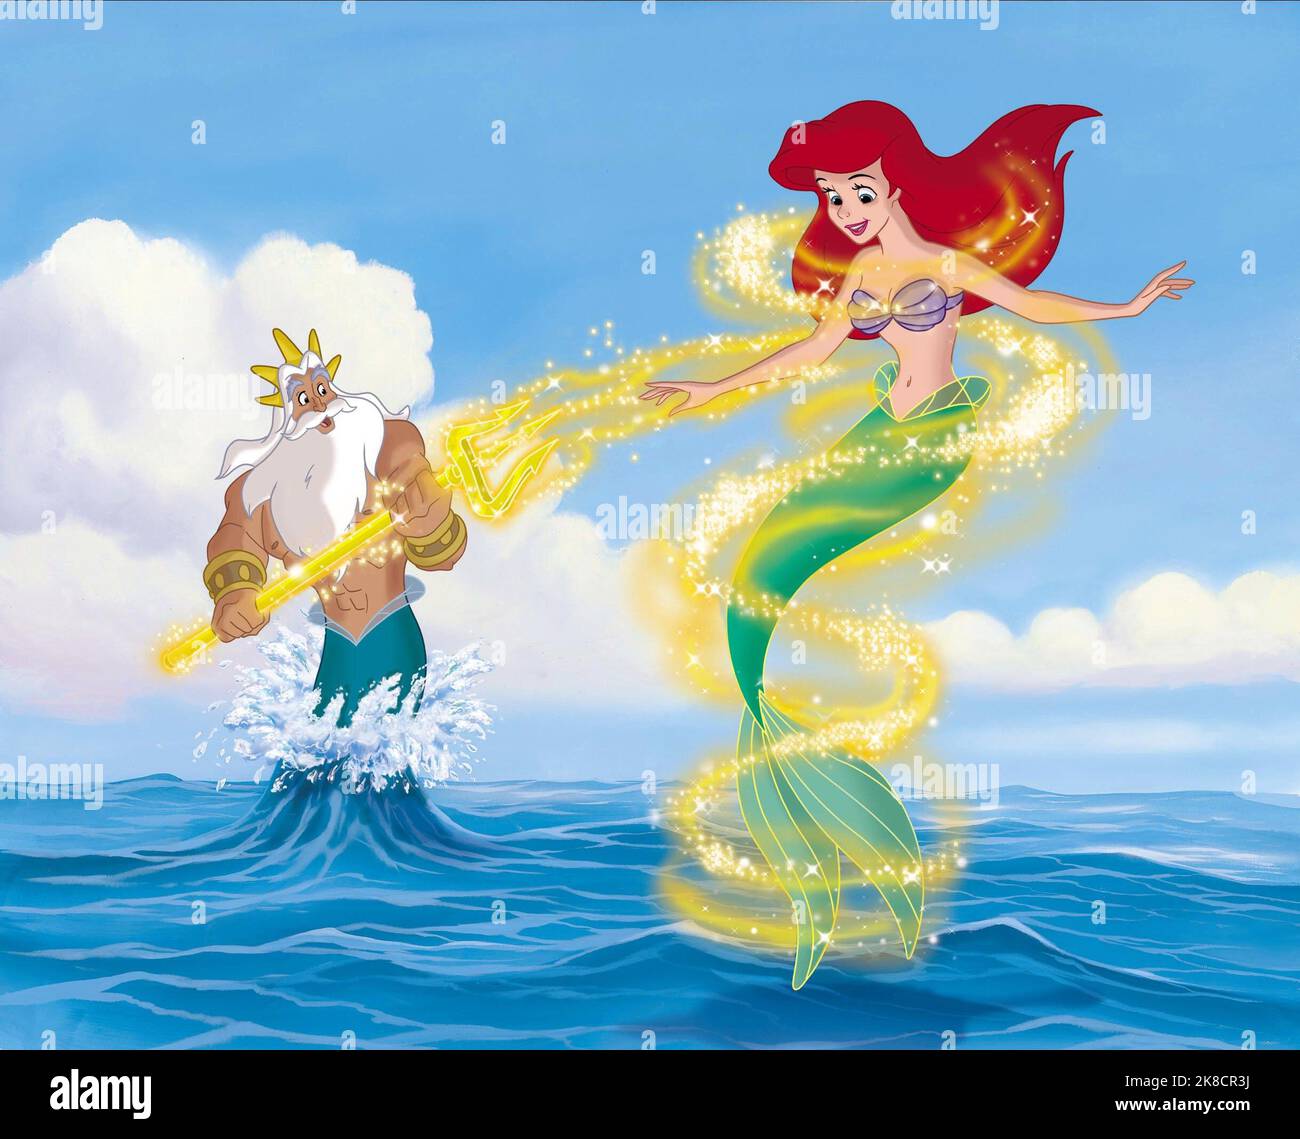 king triton angry little mermaid